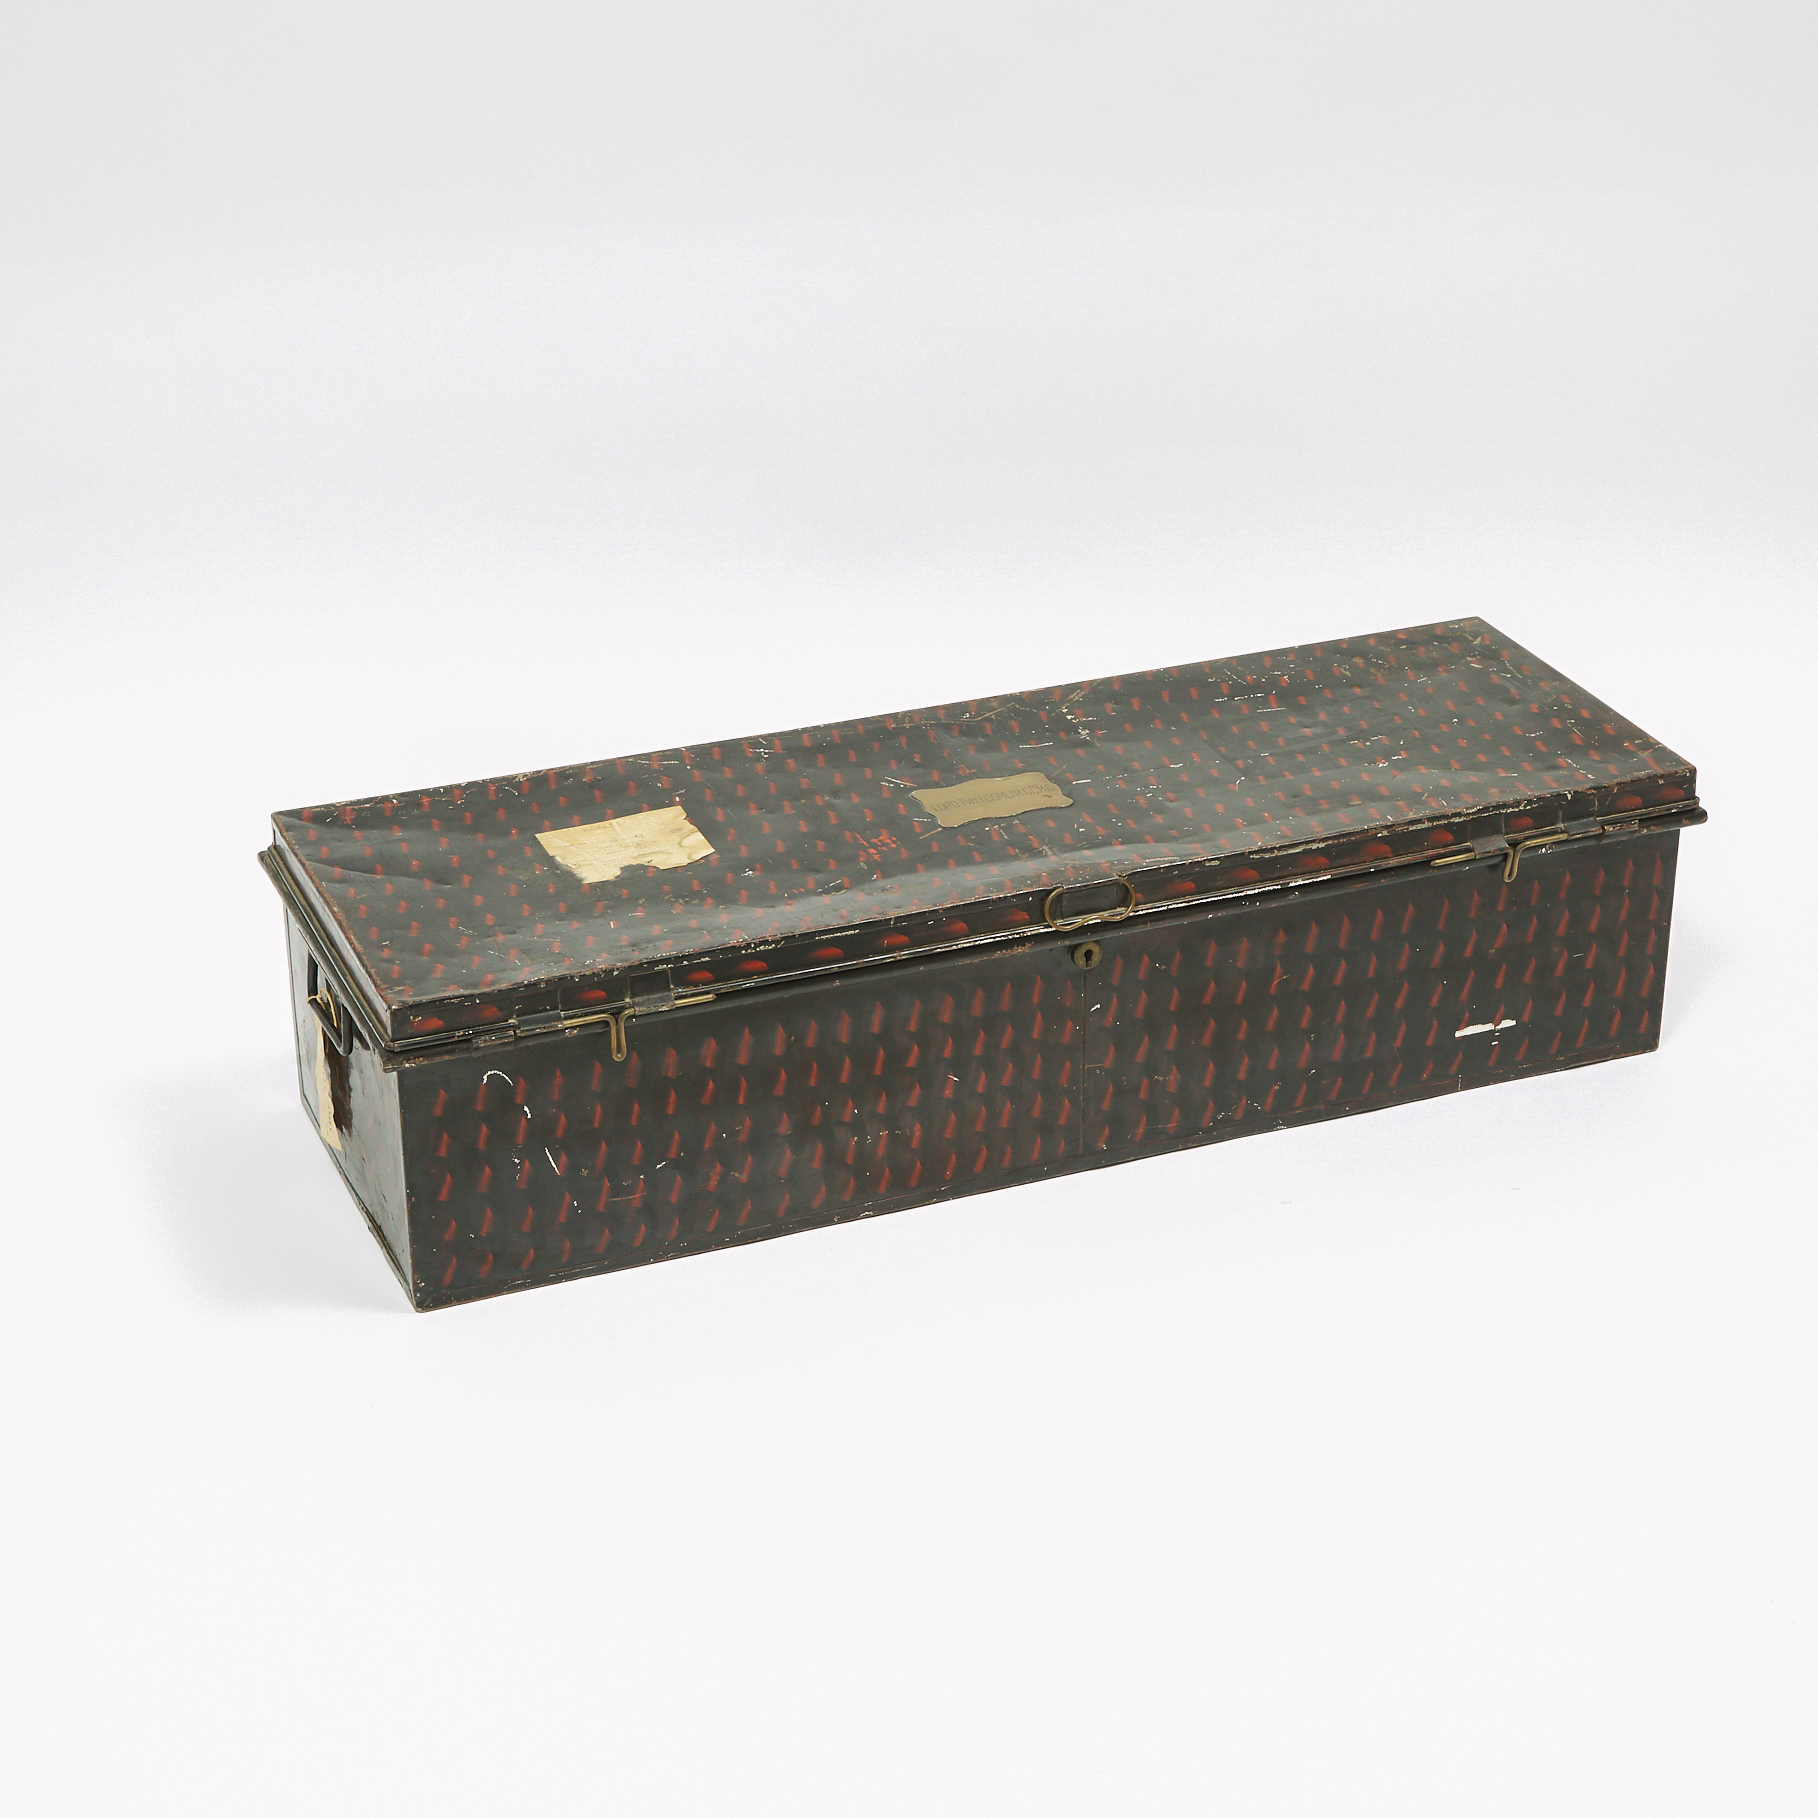 Lord Tweedsmuir Large Tole Uniform Box, early 20th century